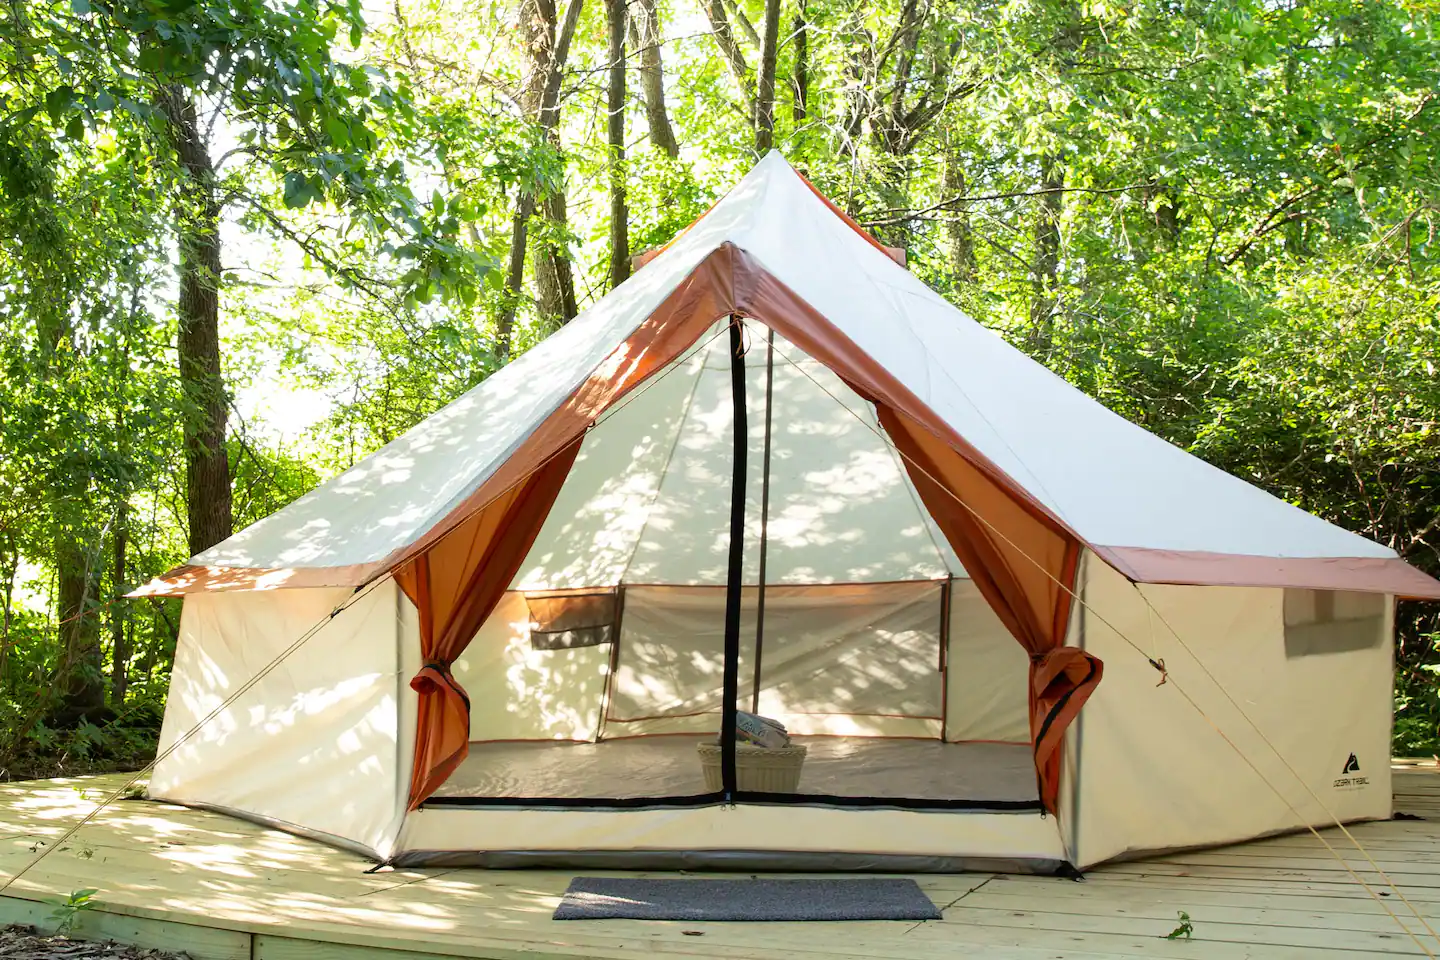 Yurt-Style Tent at Stone Creek Farm